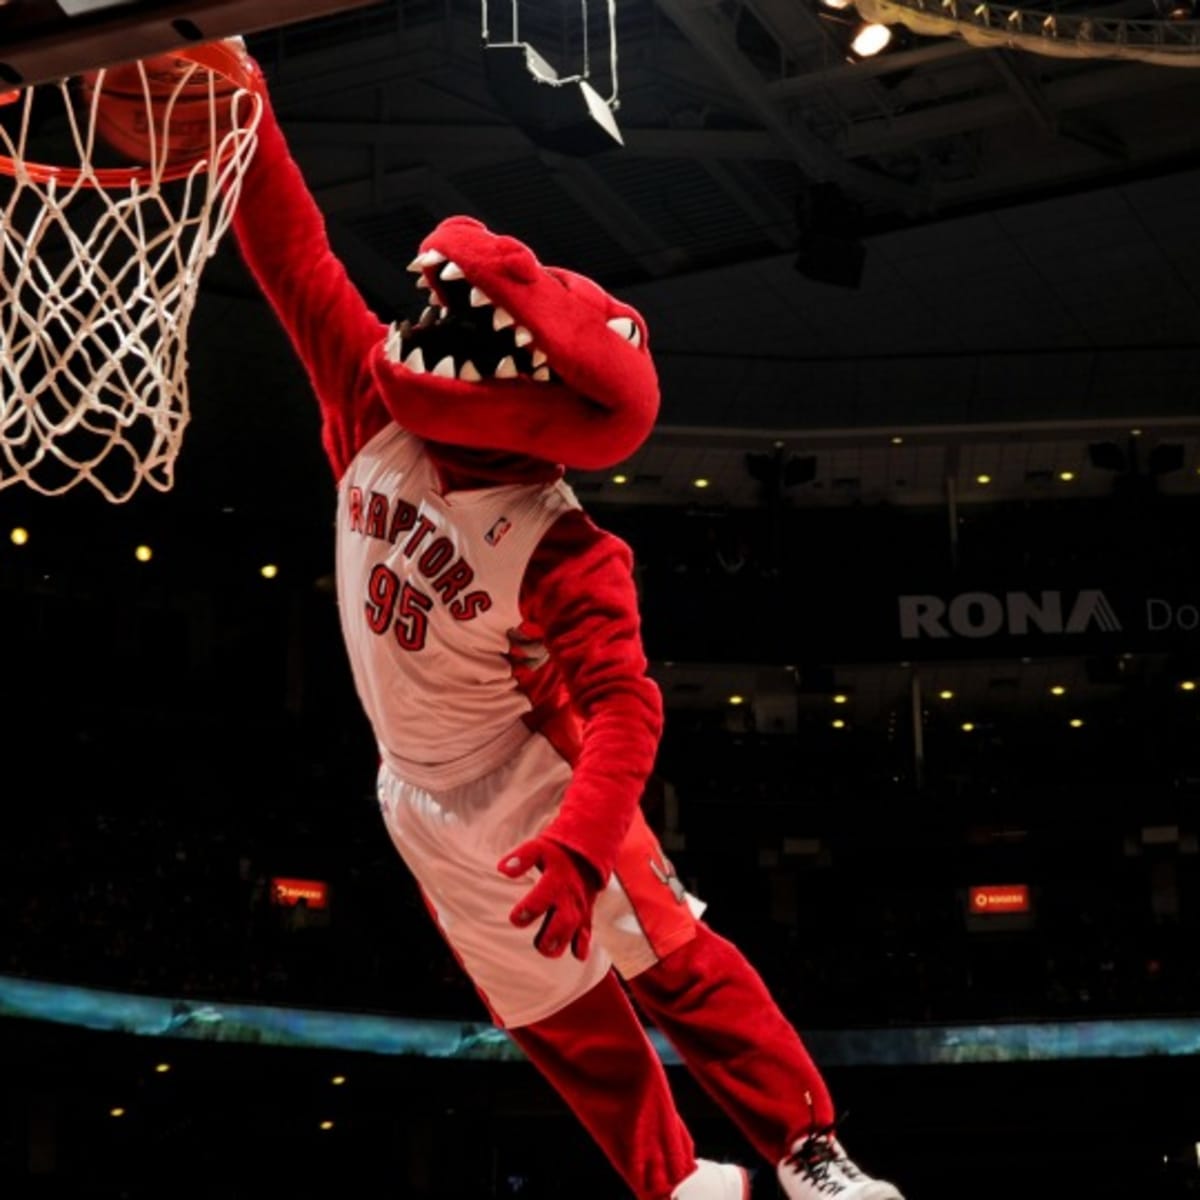 The Raptor, Mascot Wiki